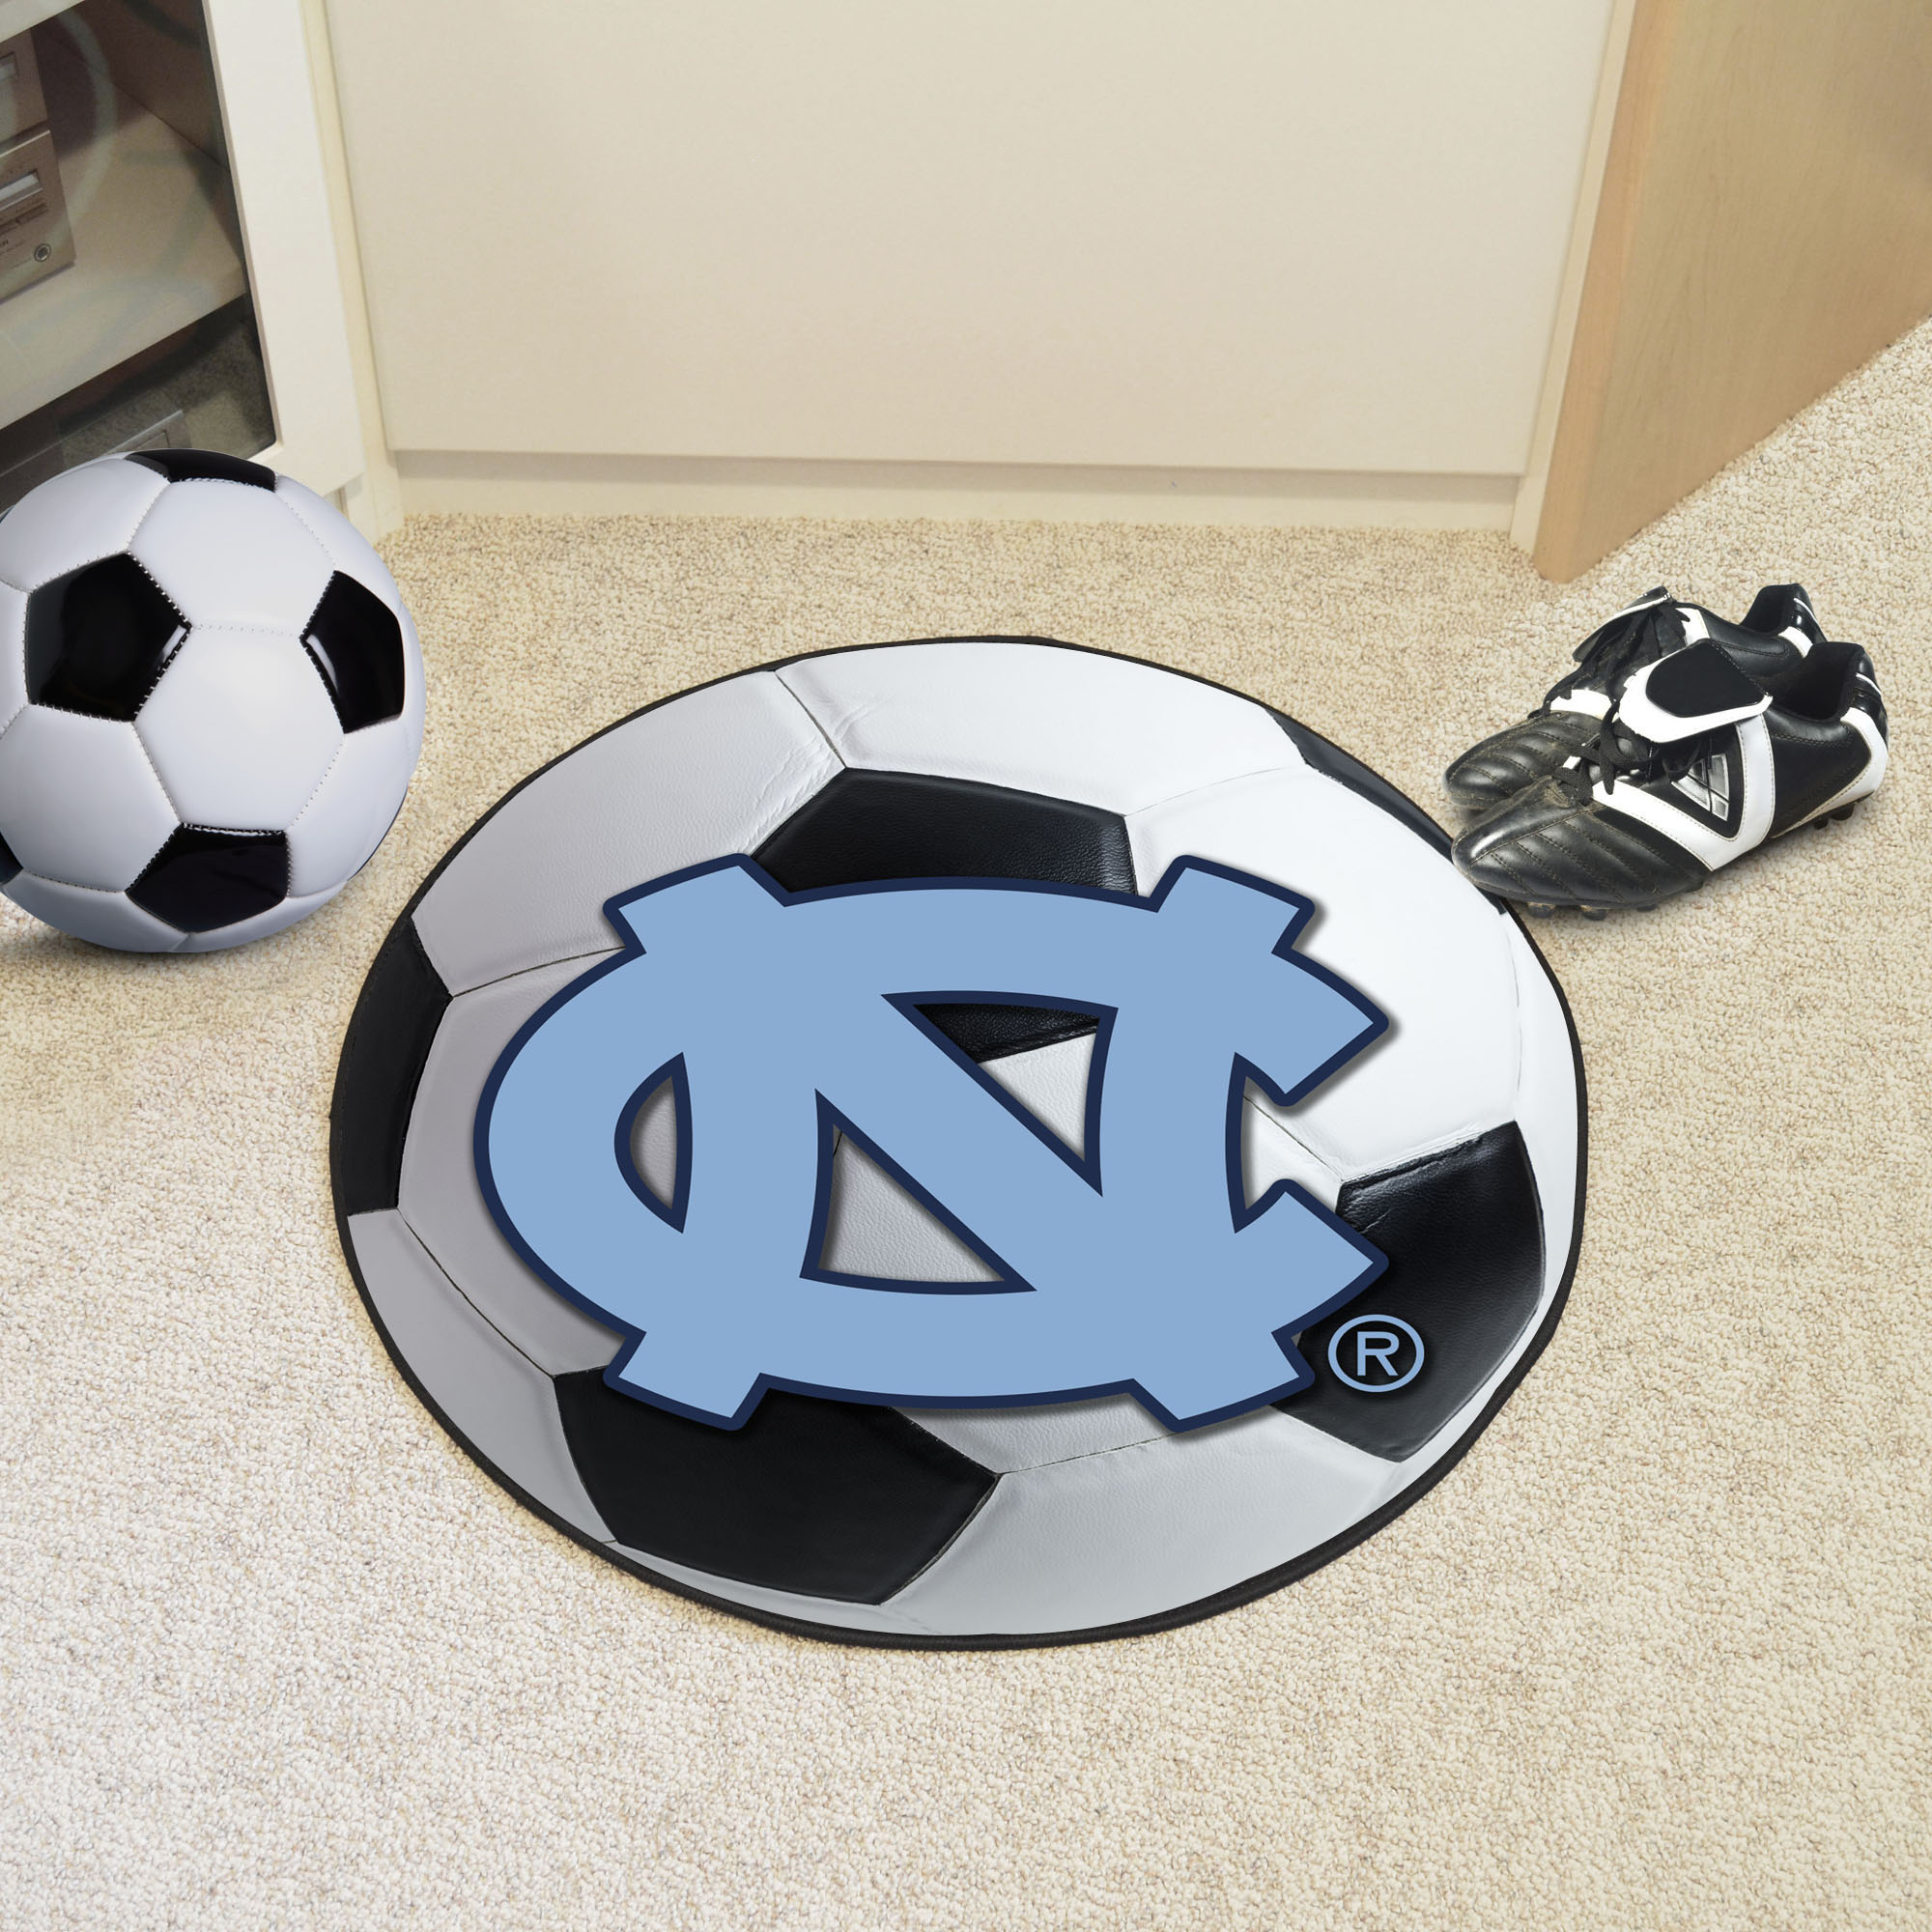 University of North Carolina Ball Shaped Area Rugs (Ball Shaped Area Rugs: Soccer Ball)